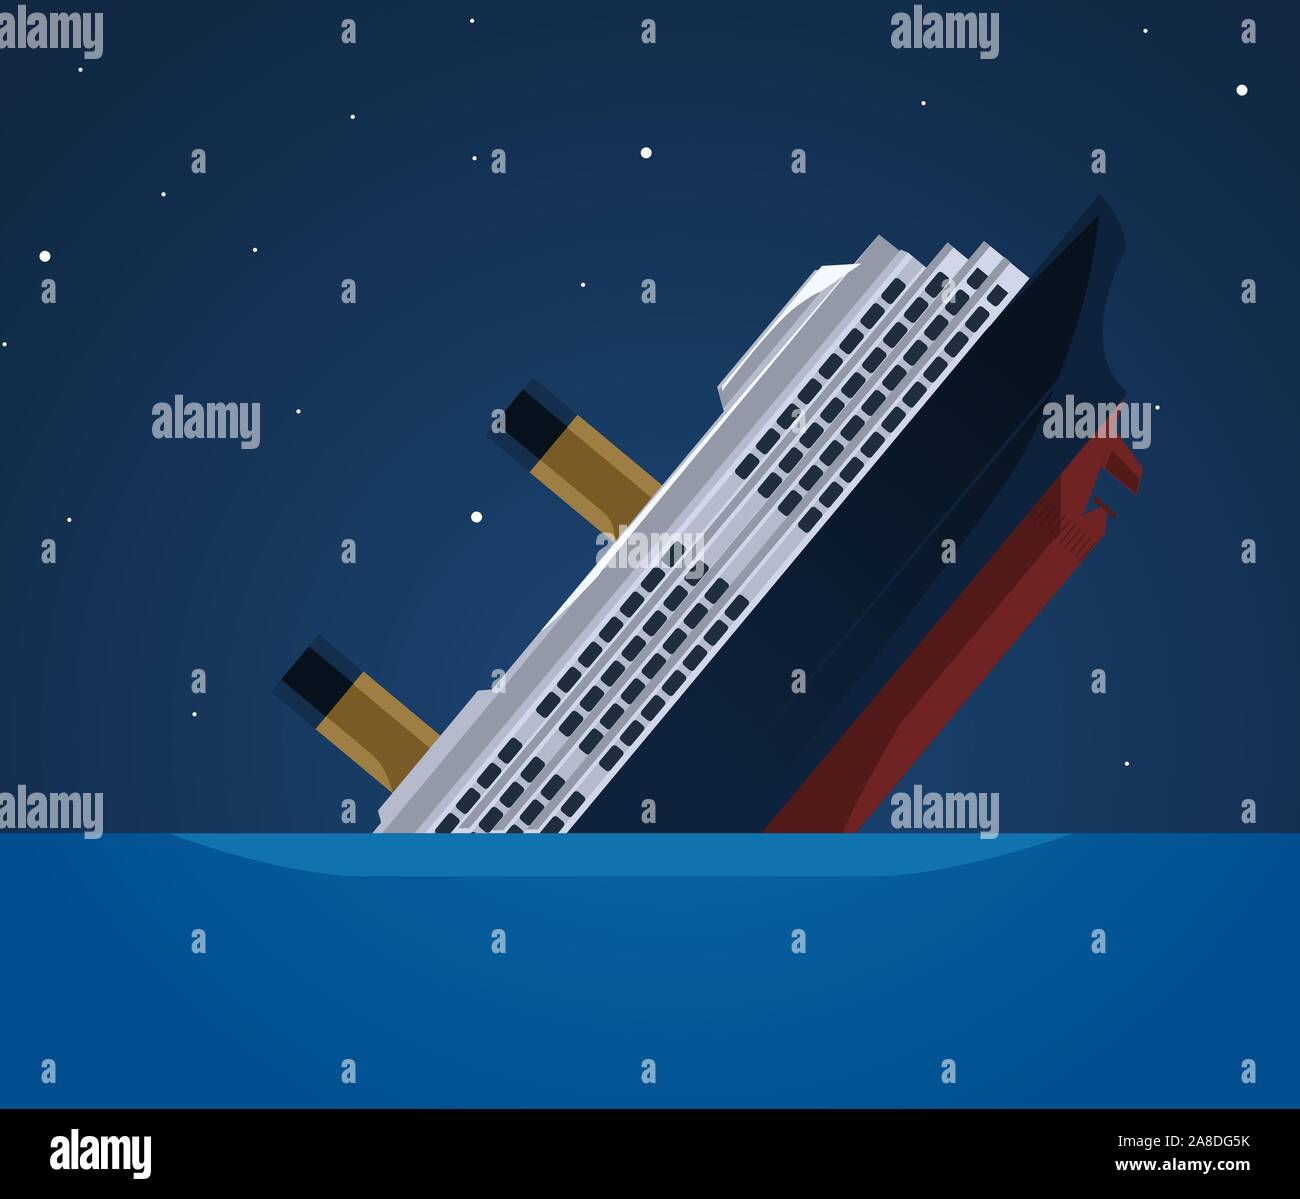 Sinking ship illustration Stock Vector